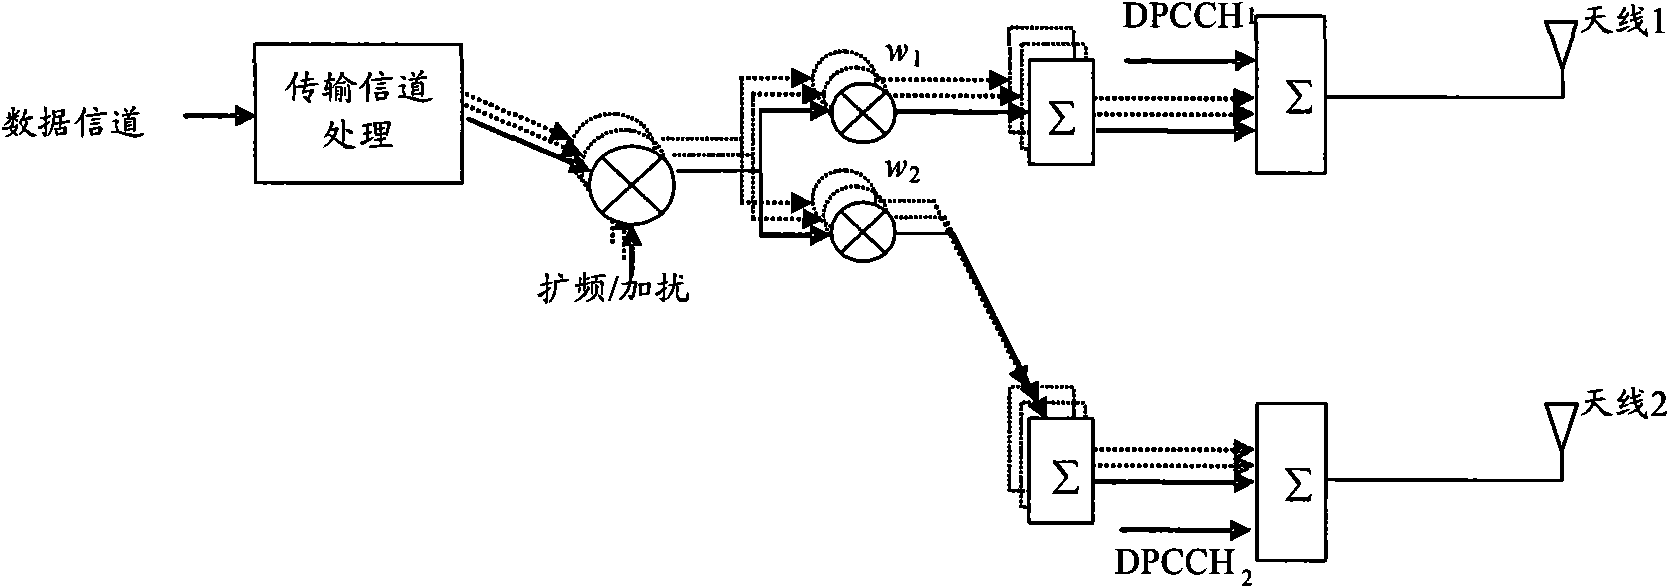 Method for determining uplink transmission diversity mode and communication device